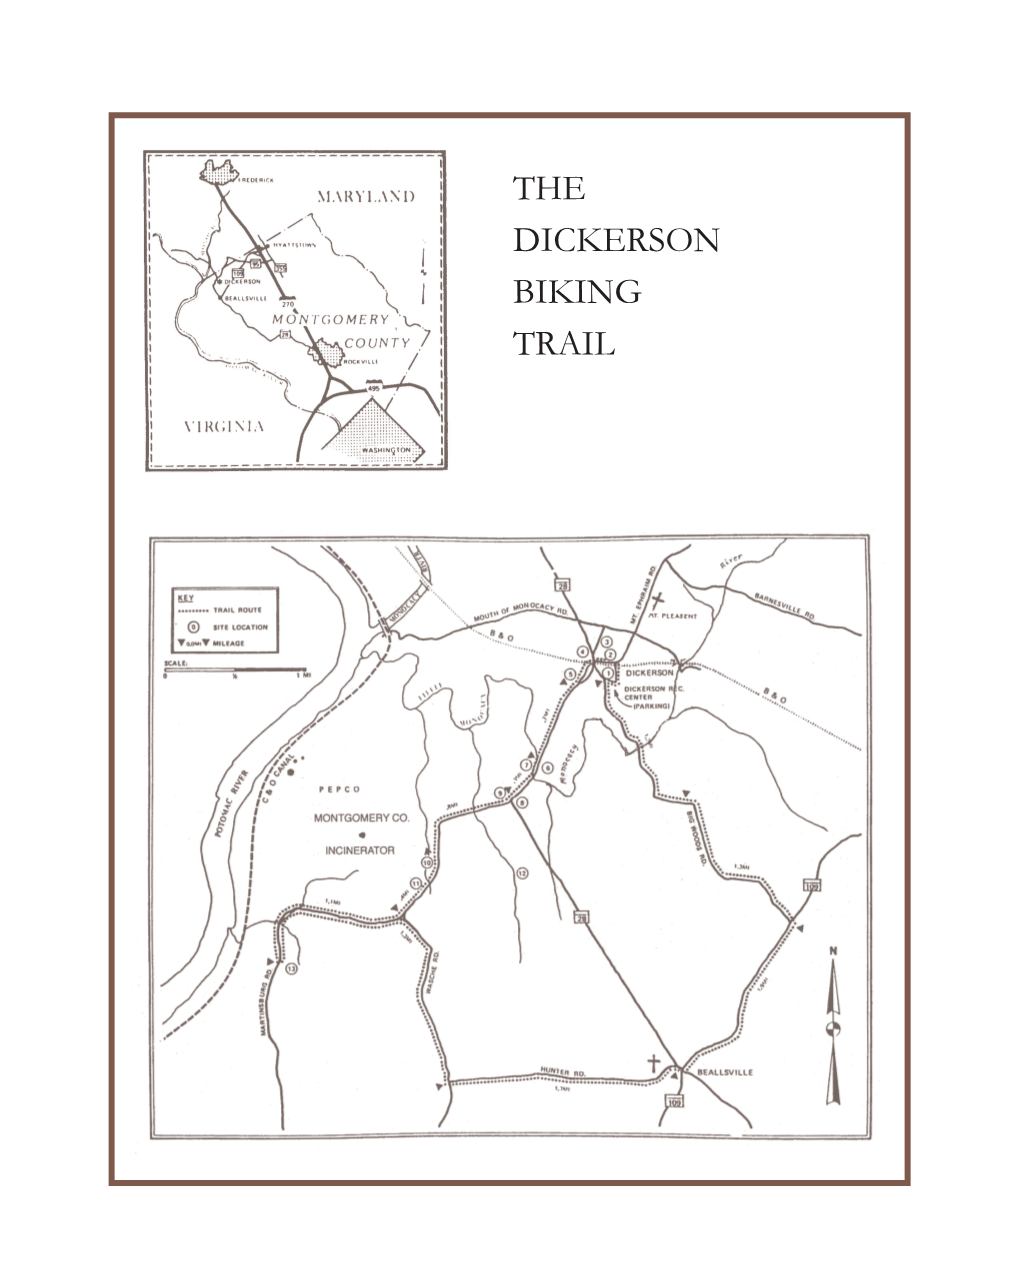 The Dickerson Biking Trail